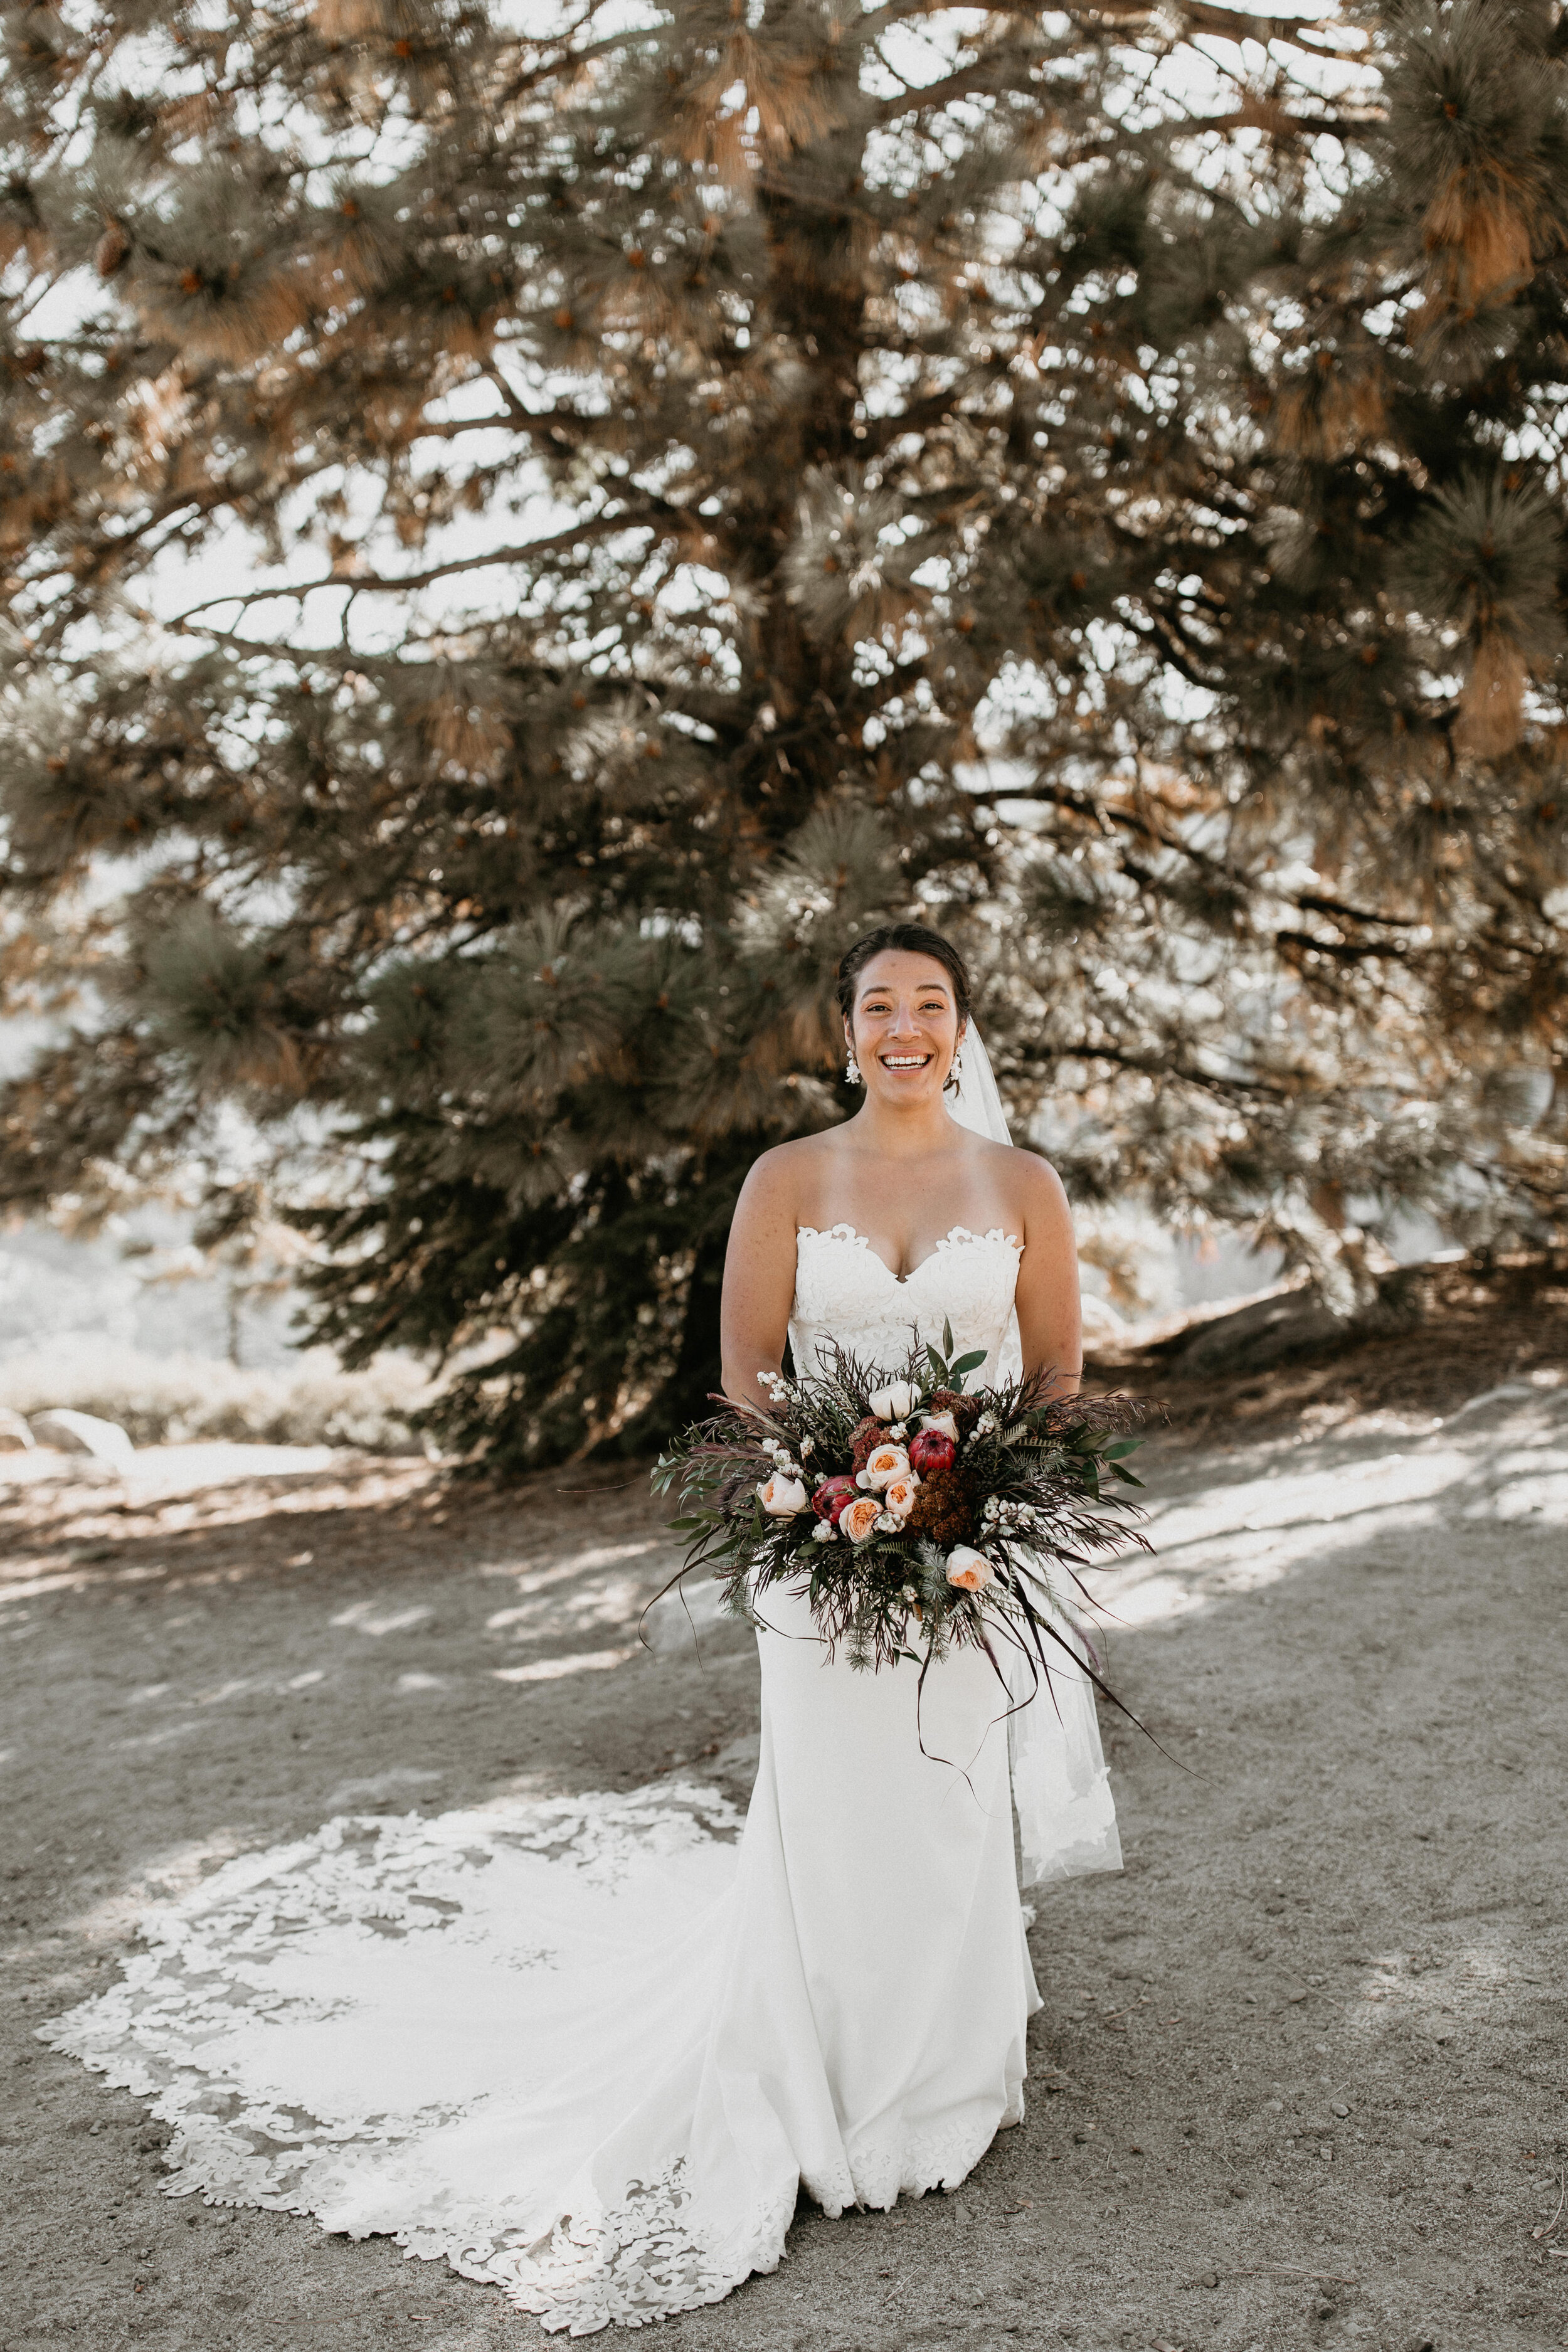 Nicole-Daacke-Photography-yosemite-national-park-elopement-photography-adventure-elopement-in-yosemite-taft-point-sunset-elopement-photographs-california-intimate-destination-wedding-in-yosemite-national-park-6859.jpg